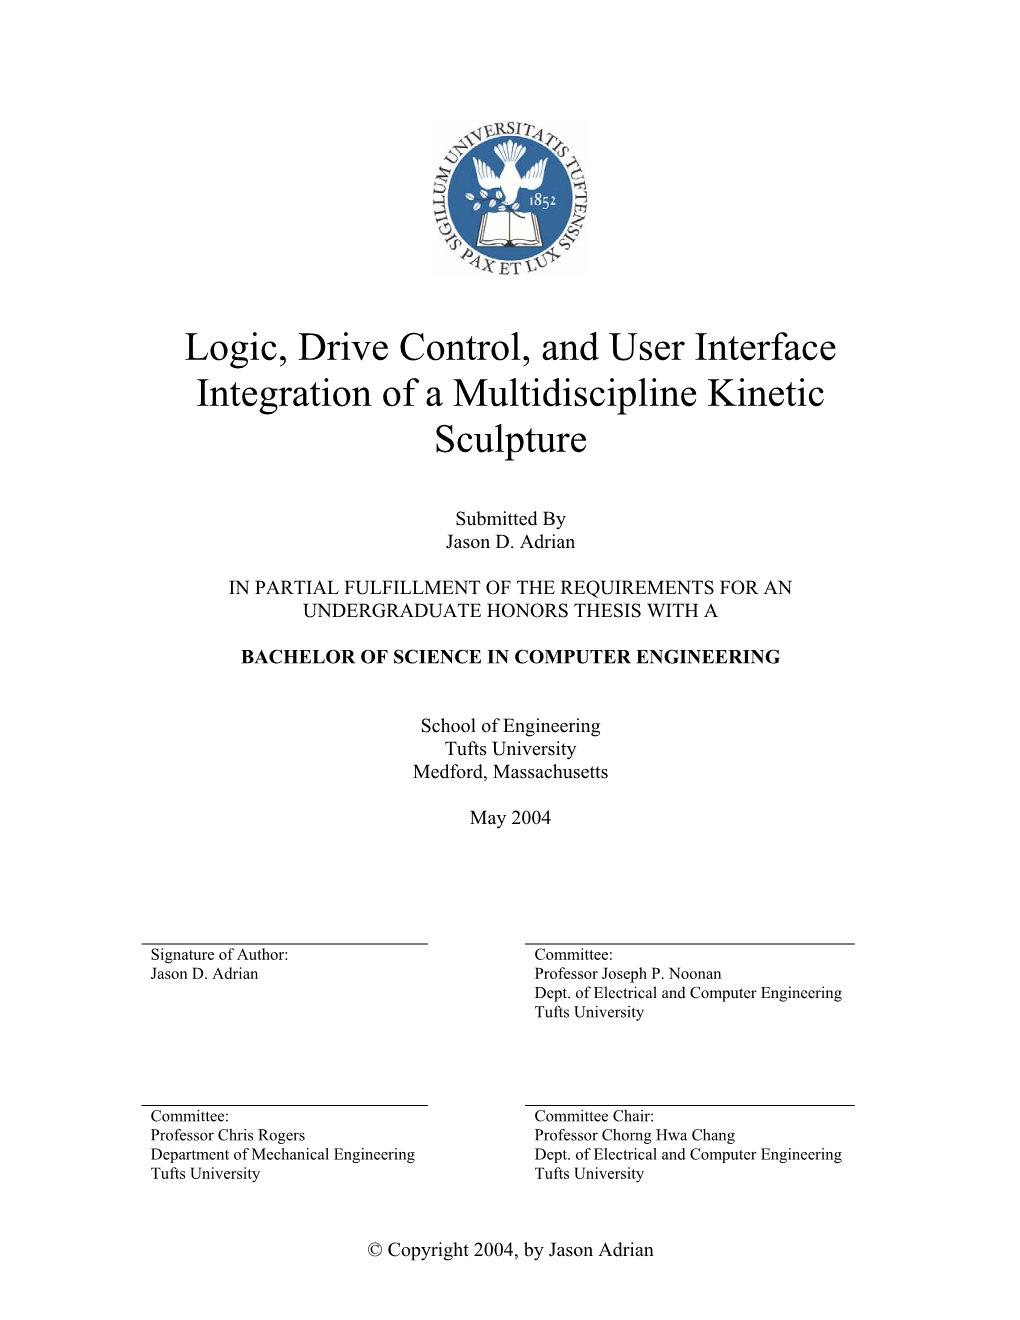 Logic, Drive Control, and User Interface Integration of a Multidiscipline Kinetic Sculpture